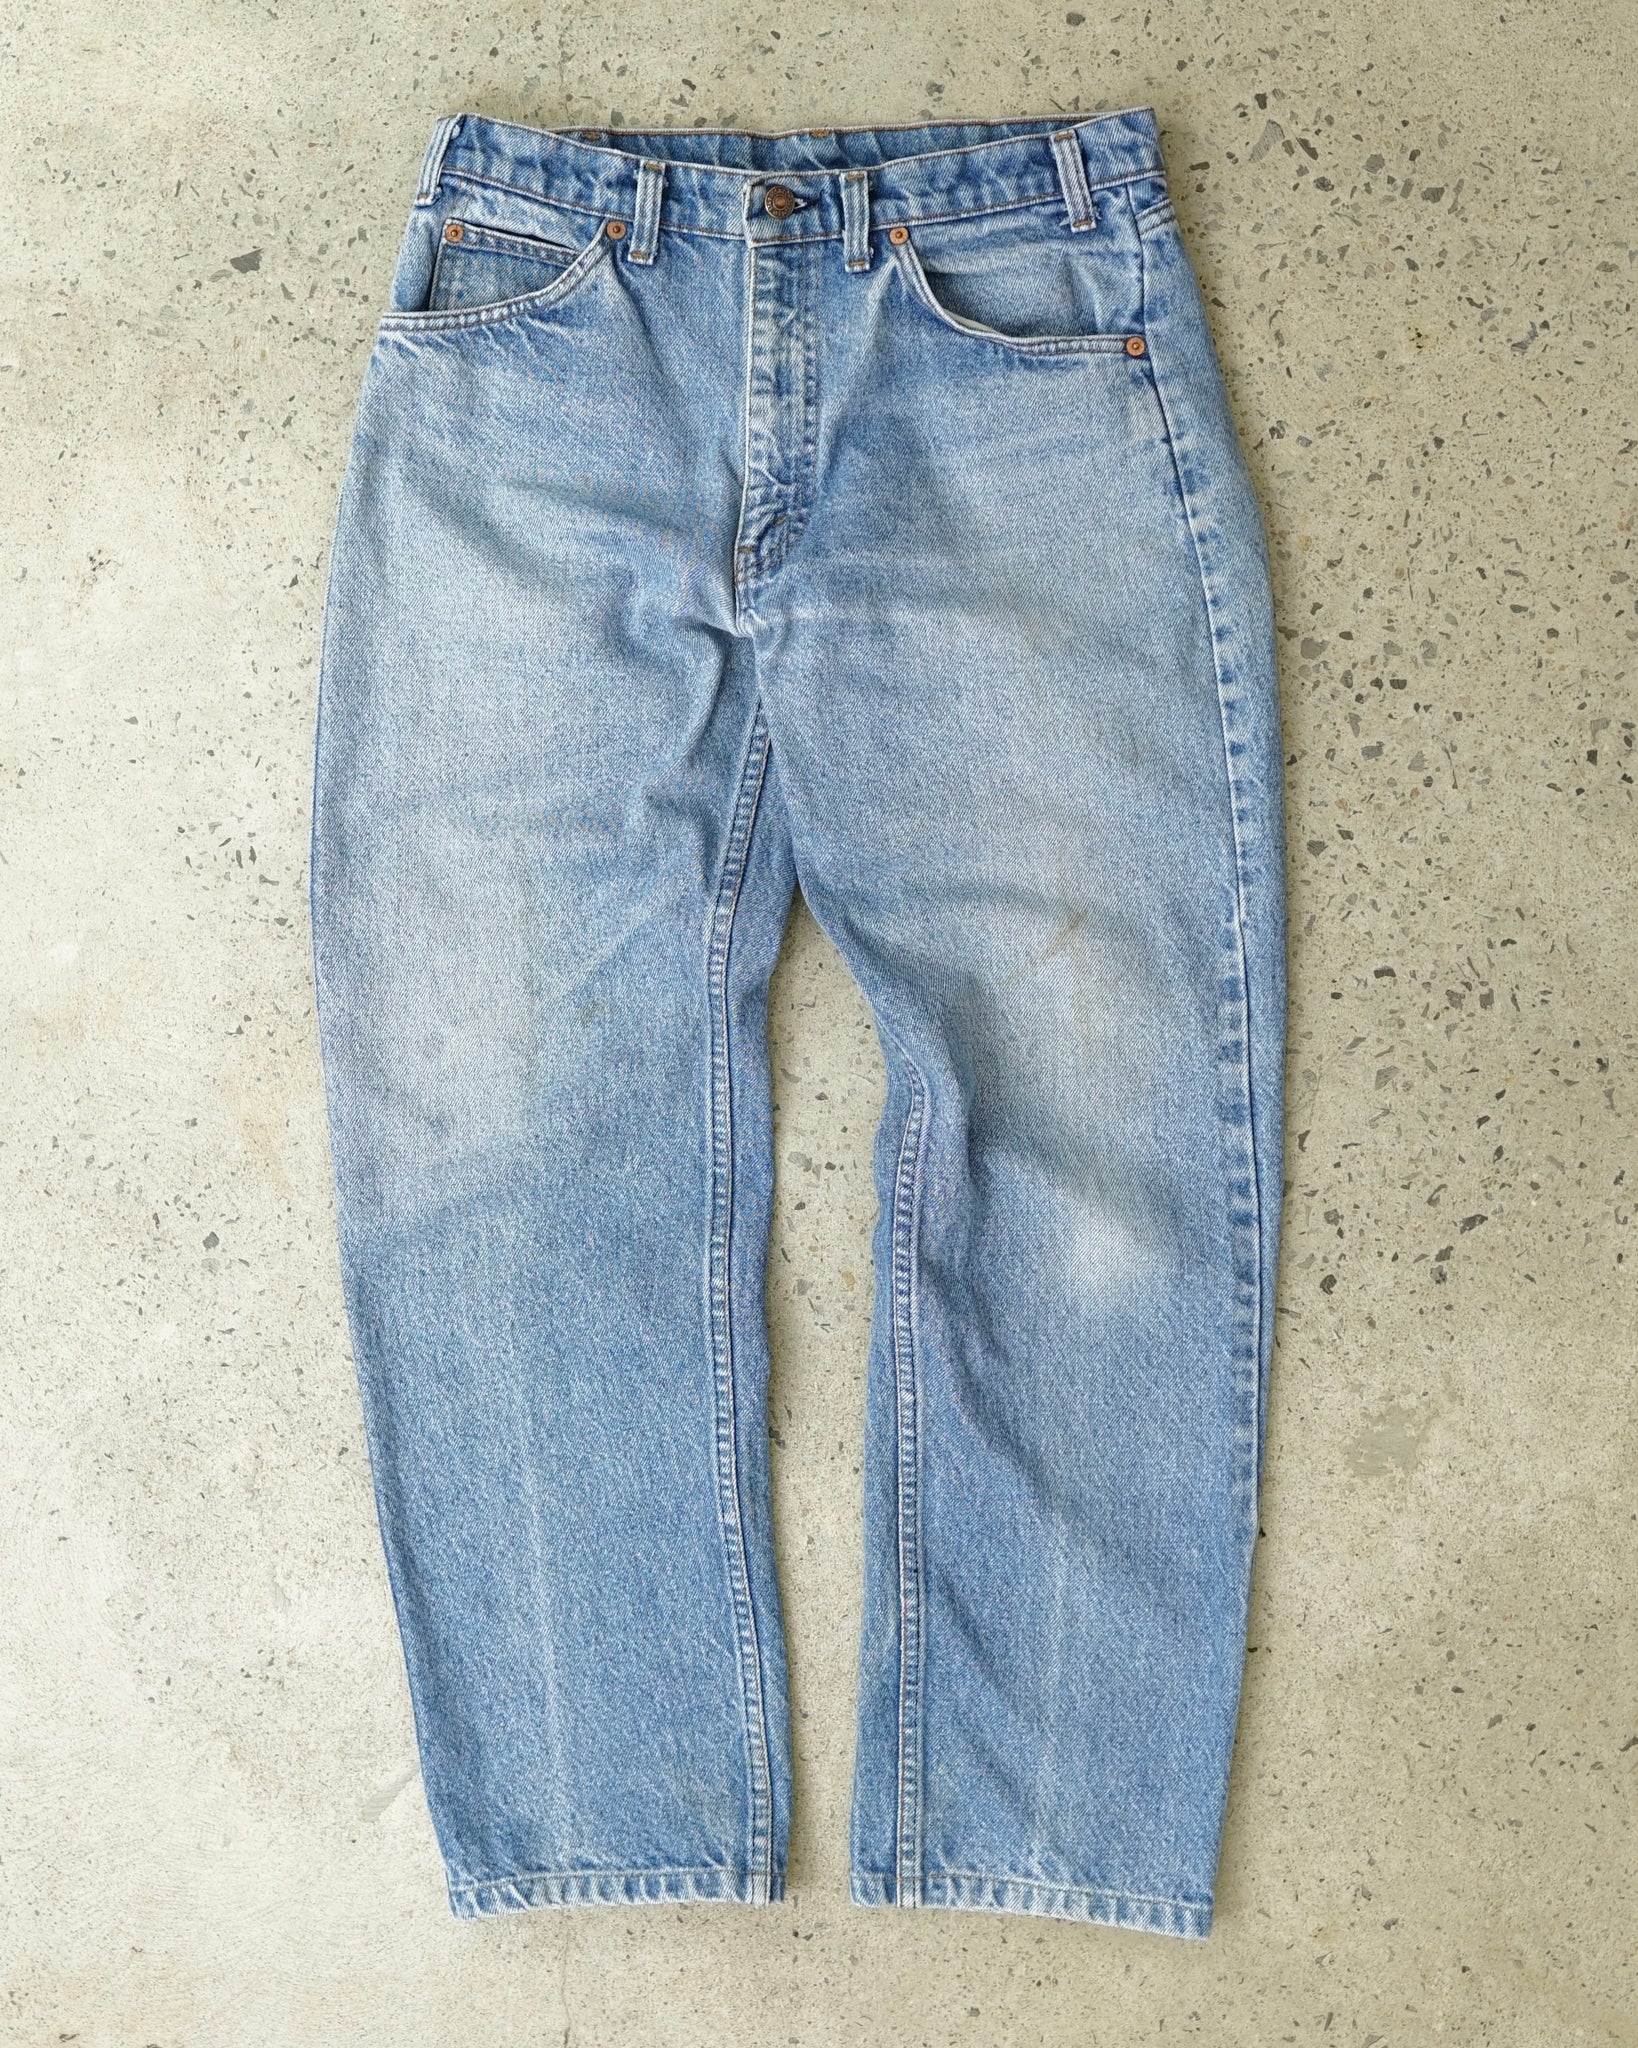 levi's orange tab jeans - 30x28